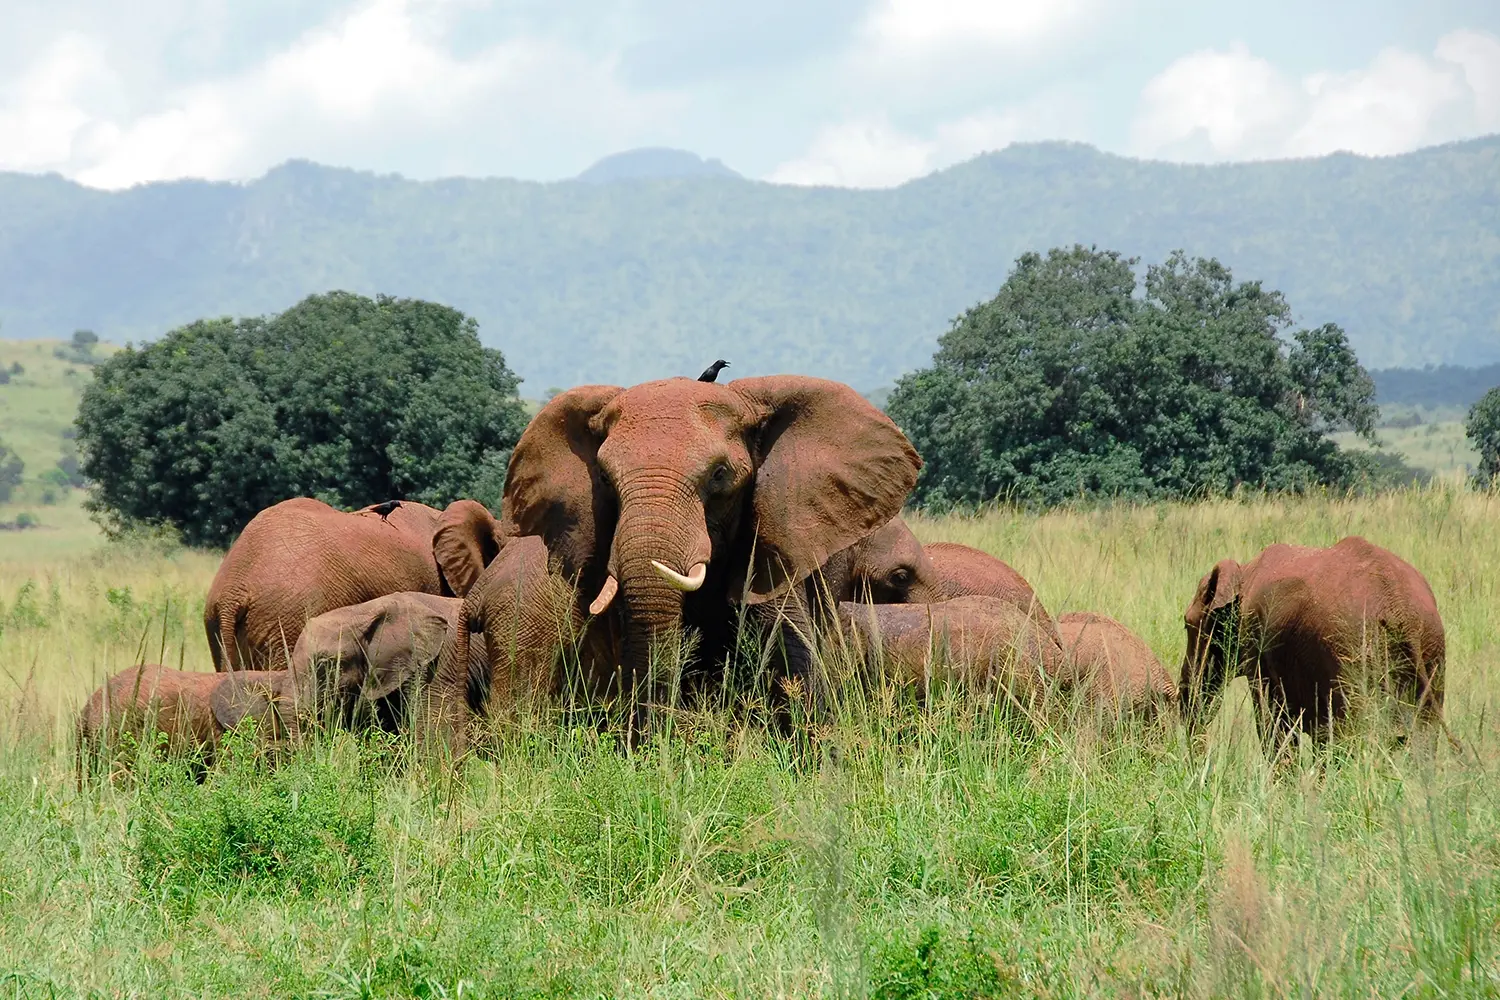 Finding the best safaris in Uganda - A herd of elephants